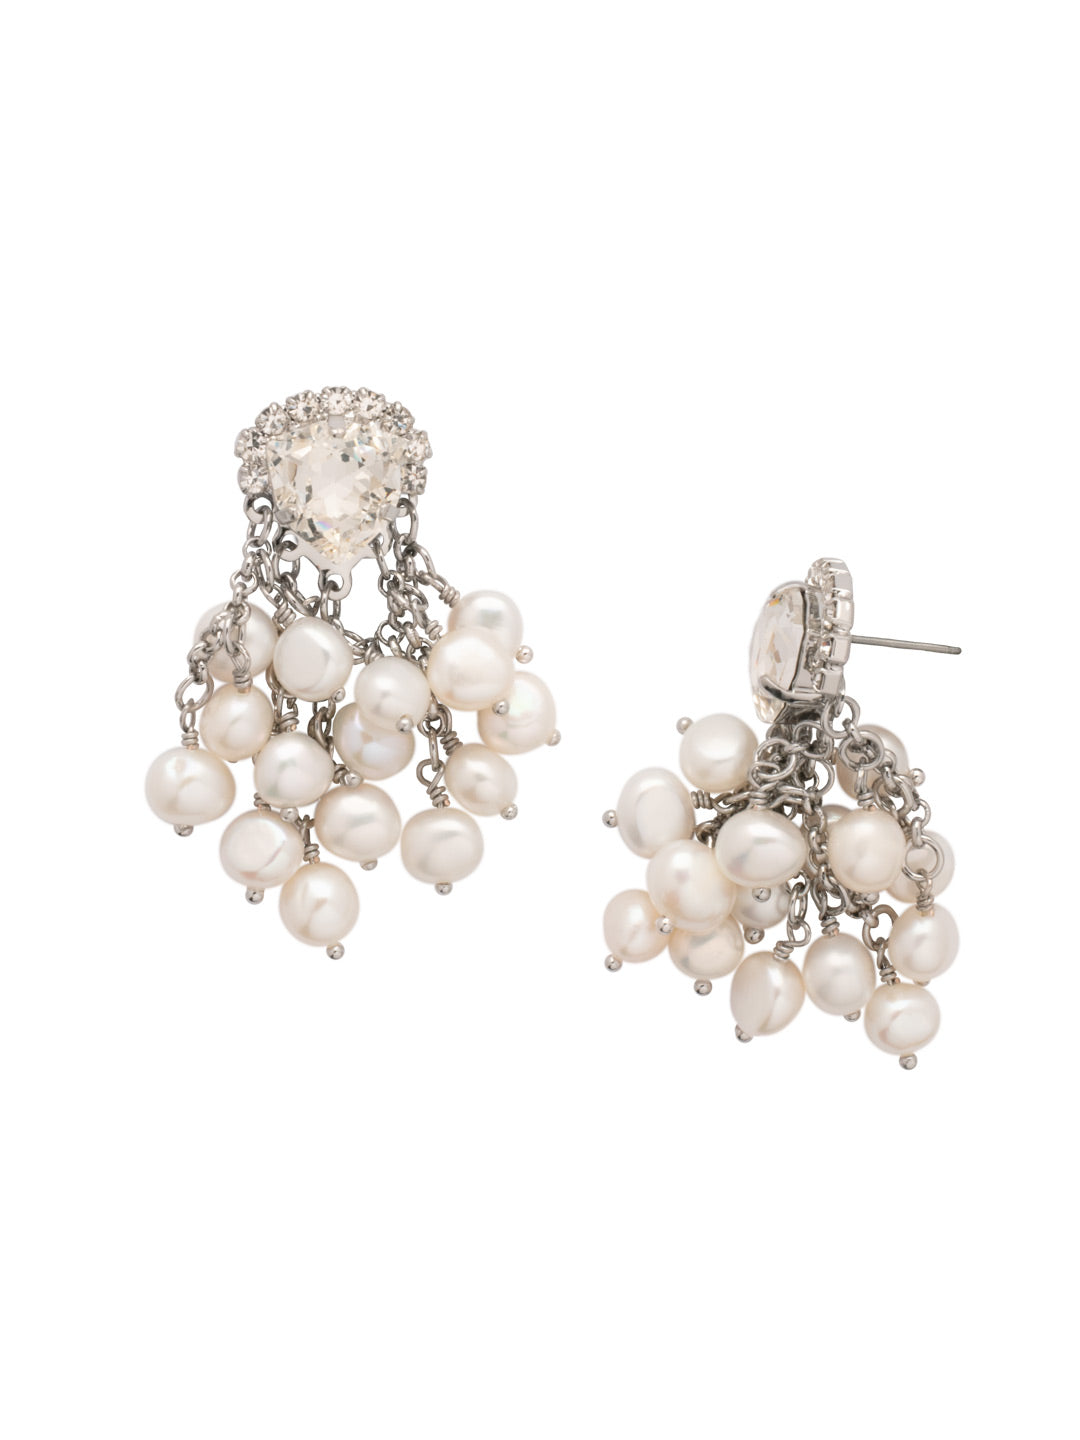 Pearl Cluster Stud Earrings - Shop Bridal Jewelry | Dareth Colburn